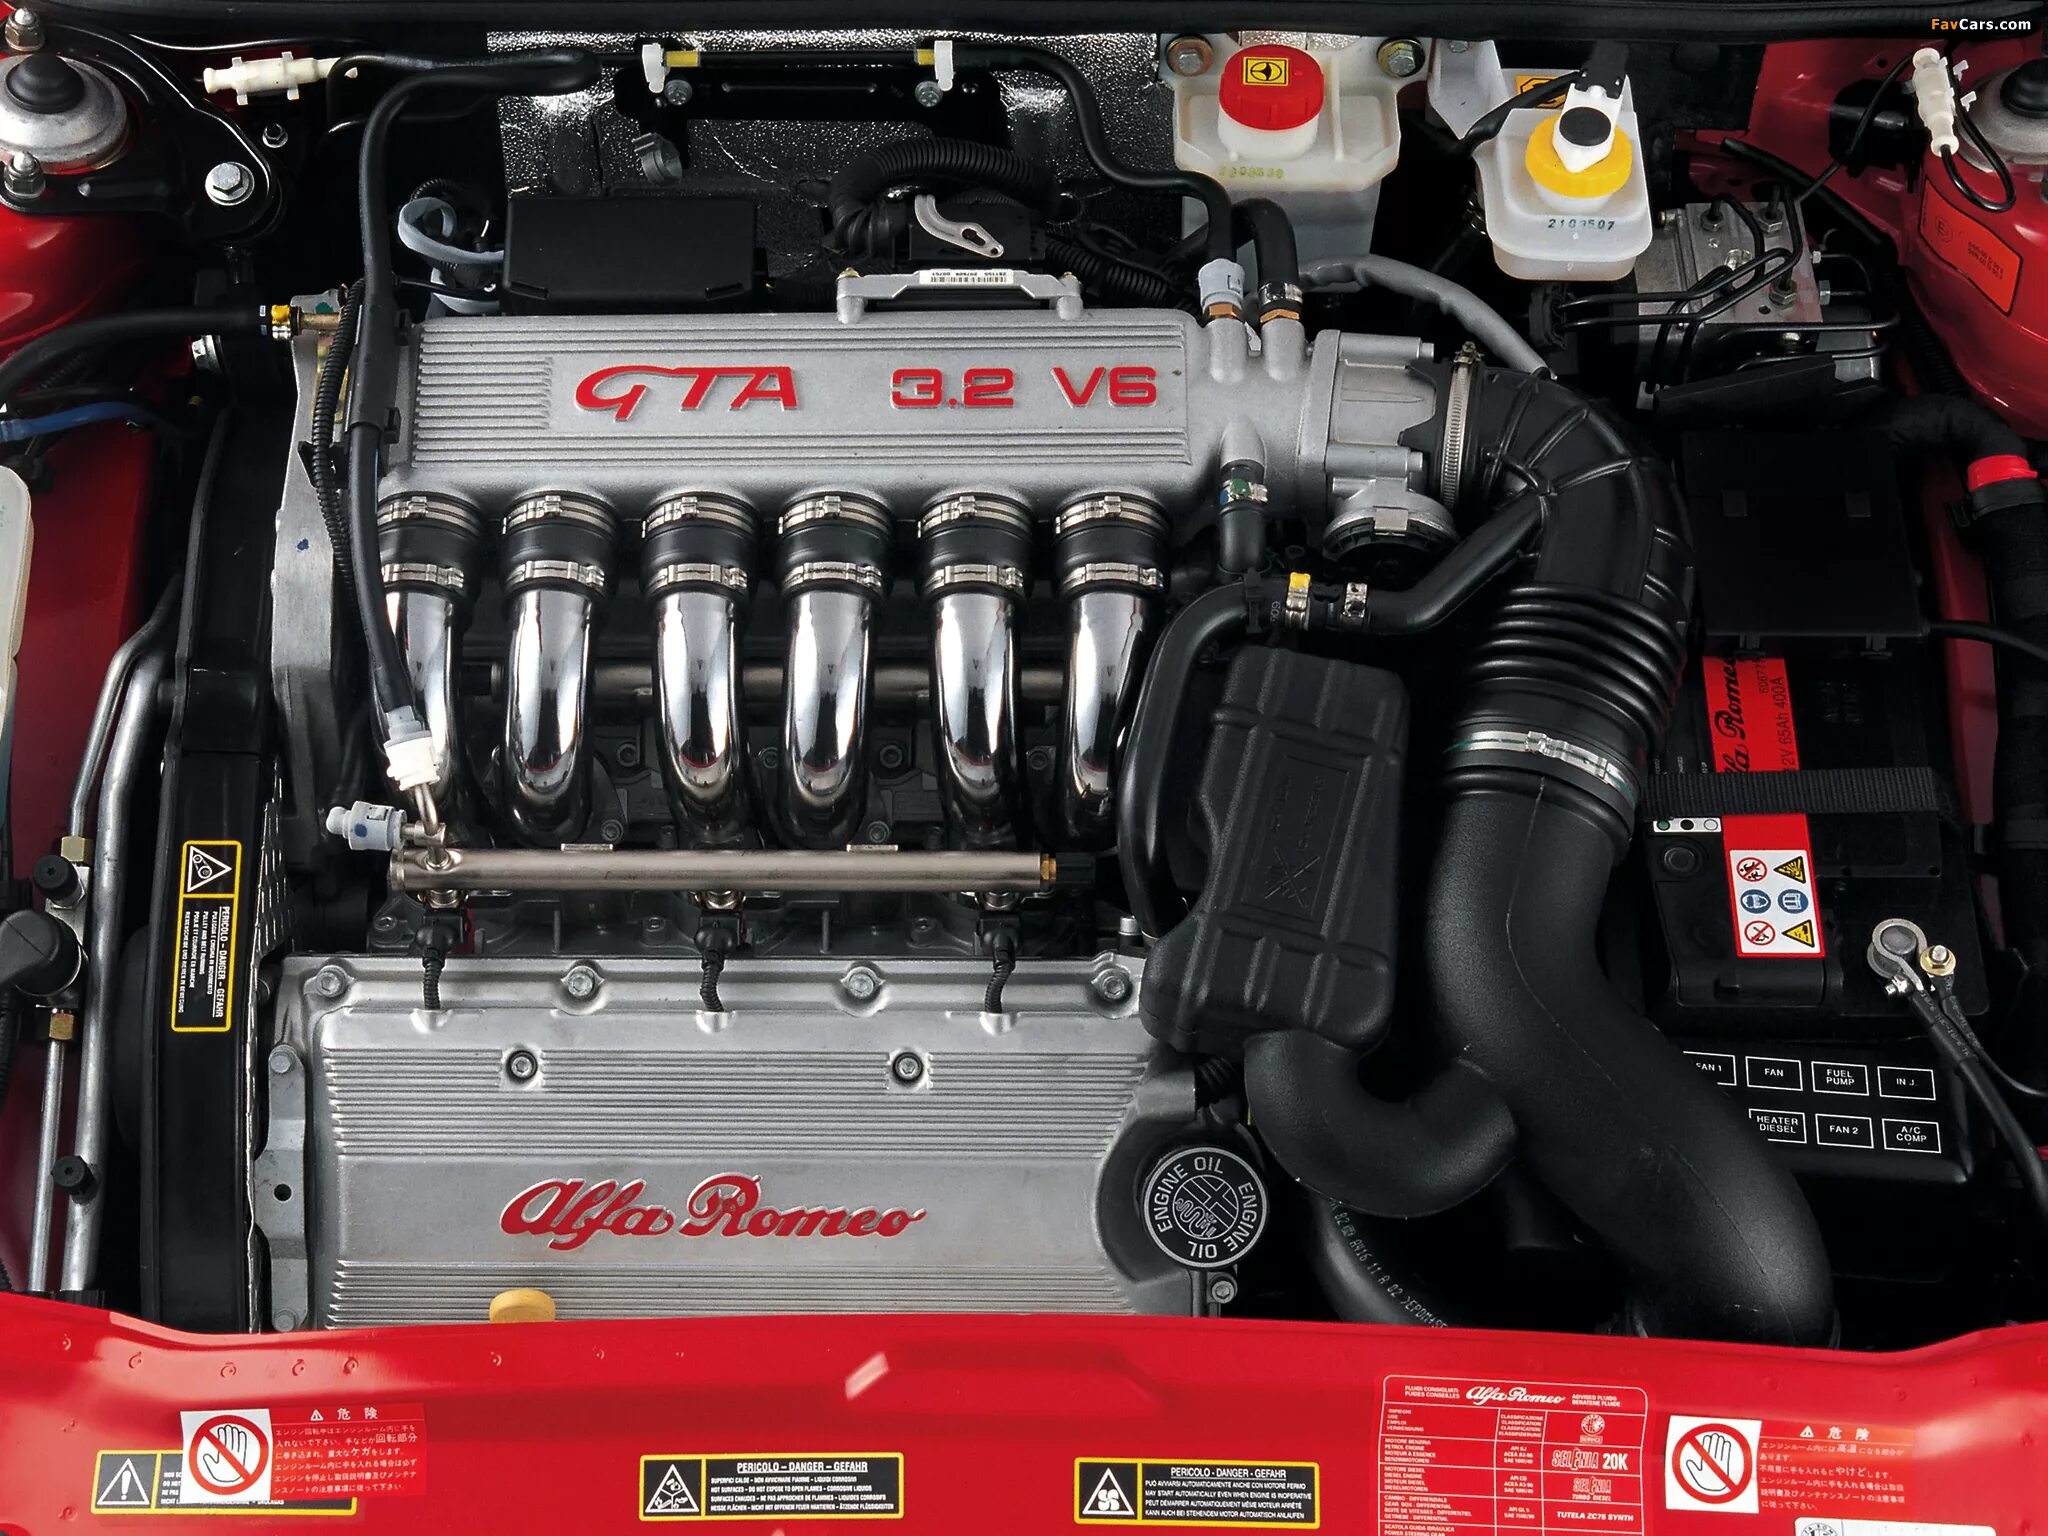 Alfa Romeo 156 v6. Альфа Ромео 156 GTA. Альфа Ромео 156 ГТА. Мотор Альфа Ромео 2.2. Моторы alfa